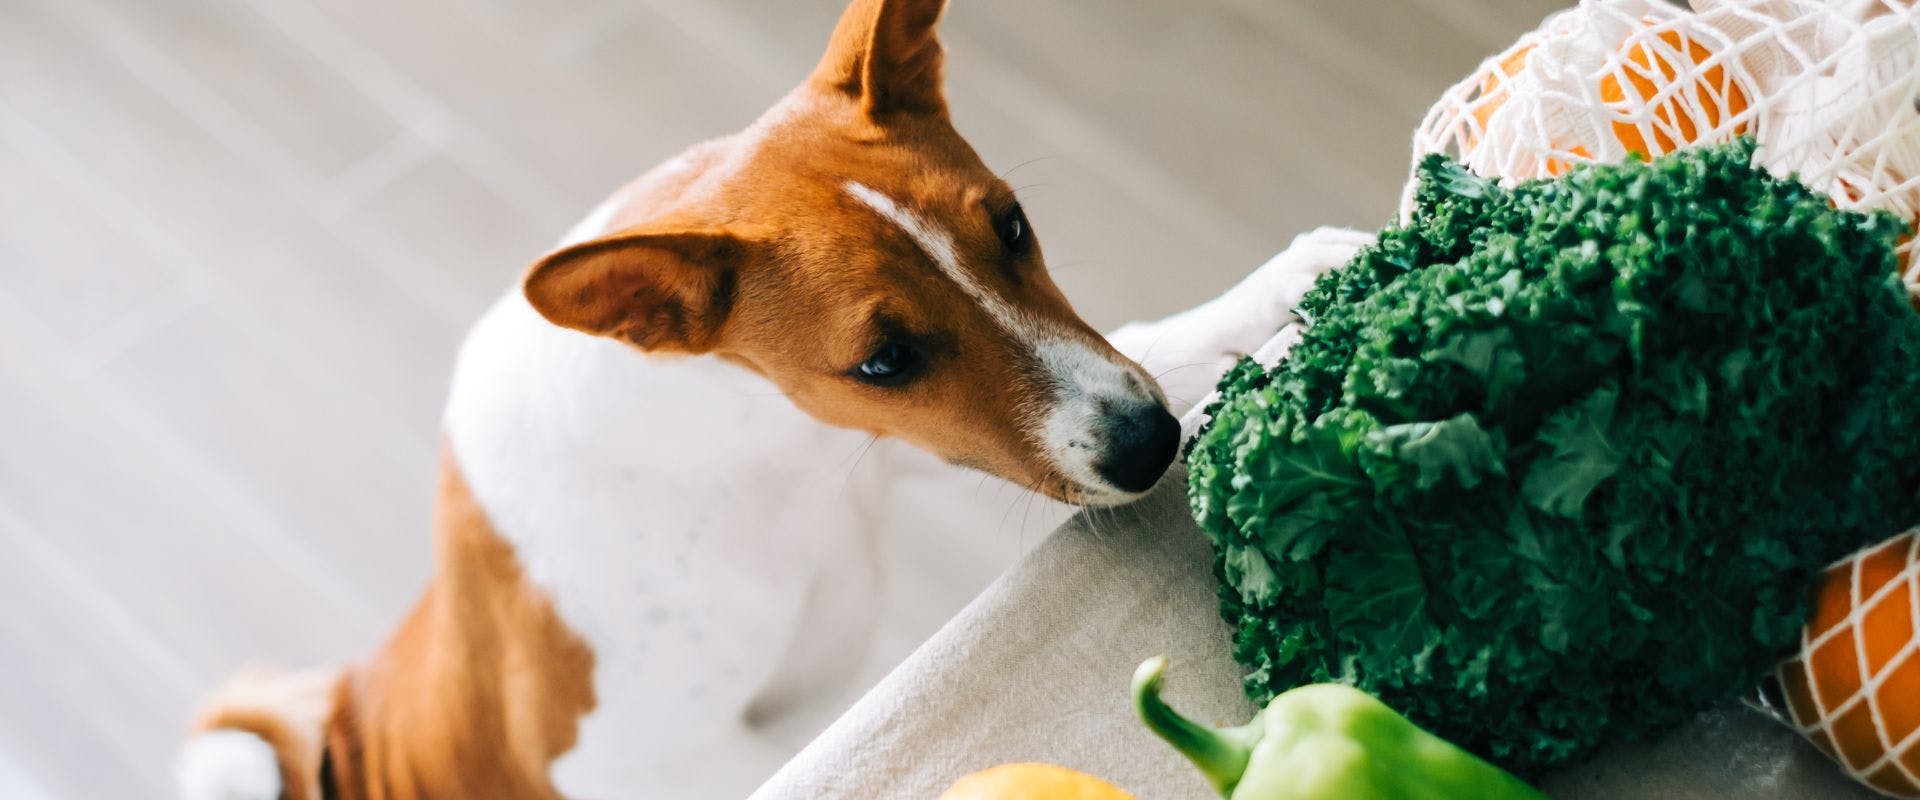 Jack Russell dog sniffing vegetables on kitchen side